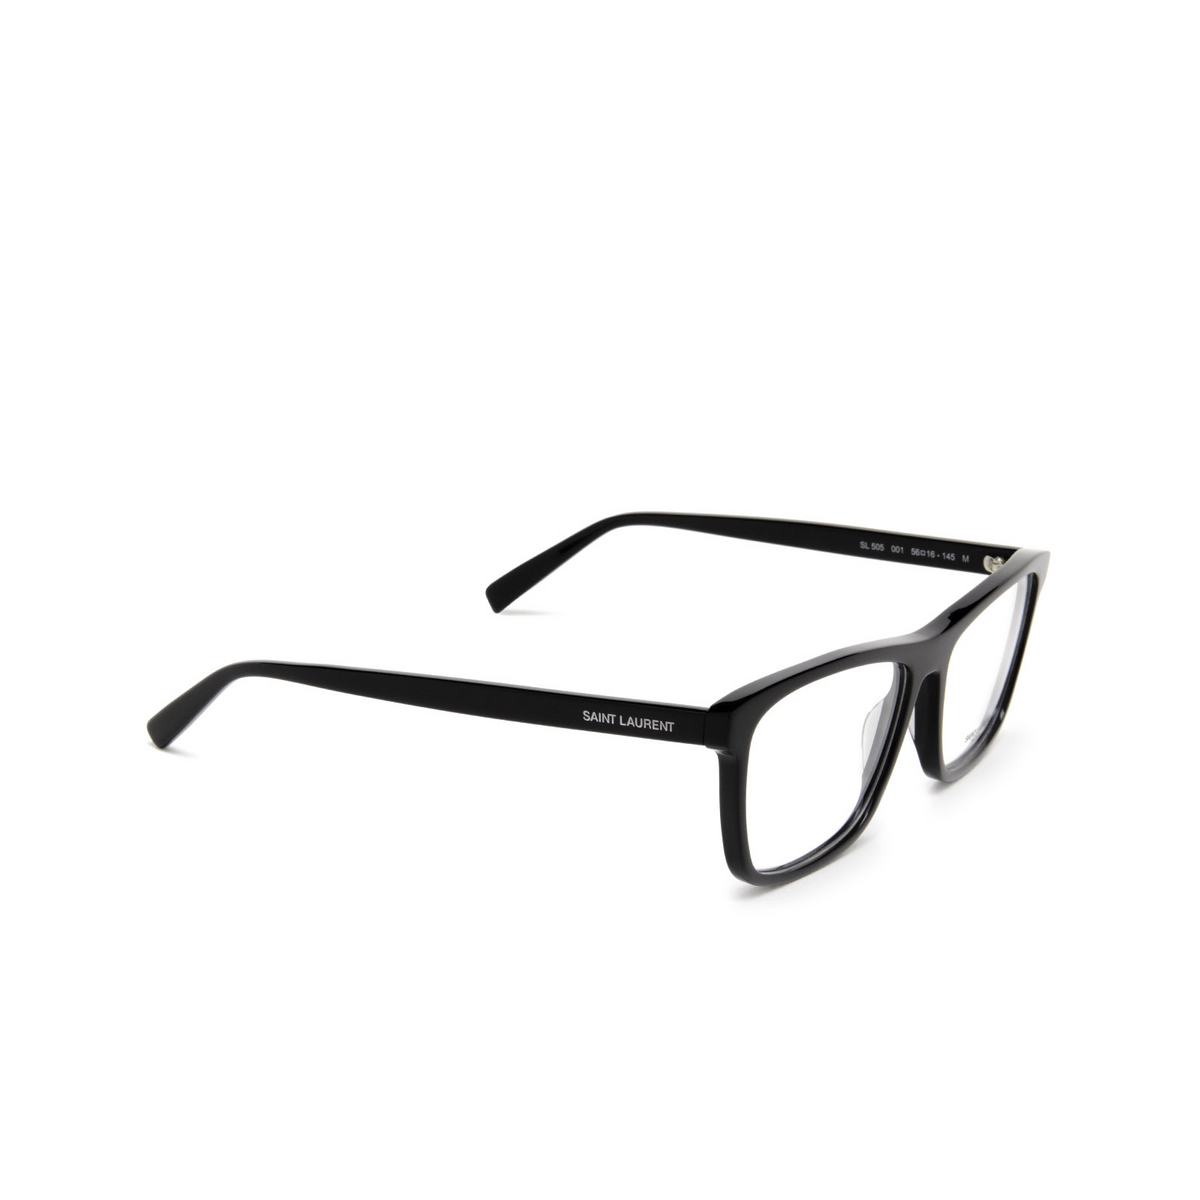 Saint Laurent® Square Eyeglasses: SL 505 color Black 001 - three-quarters view.